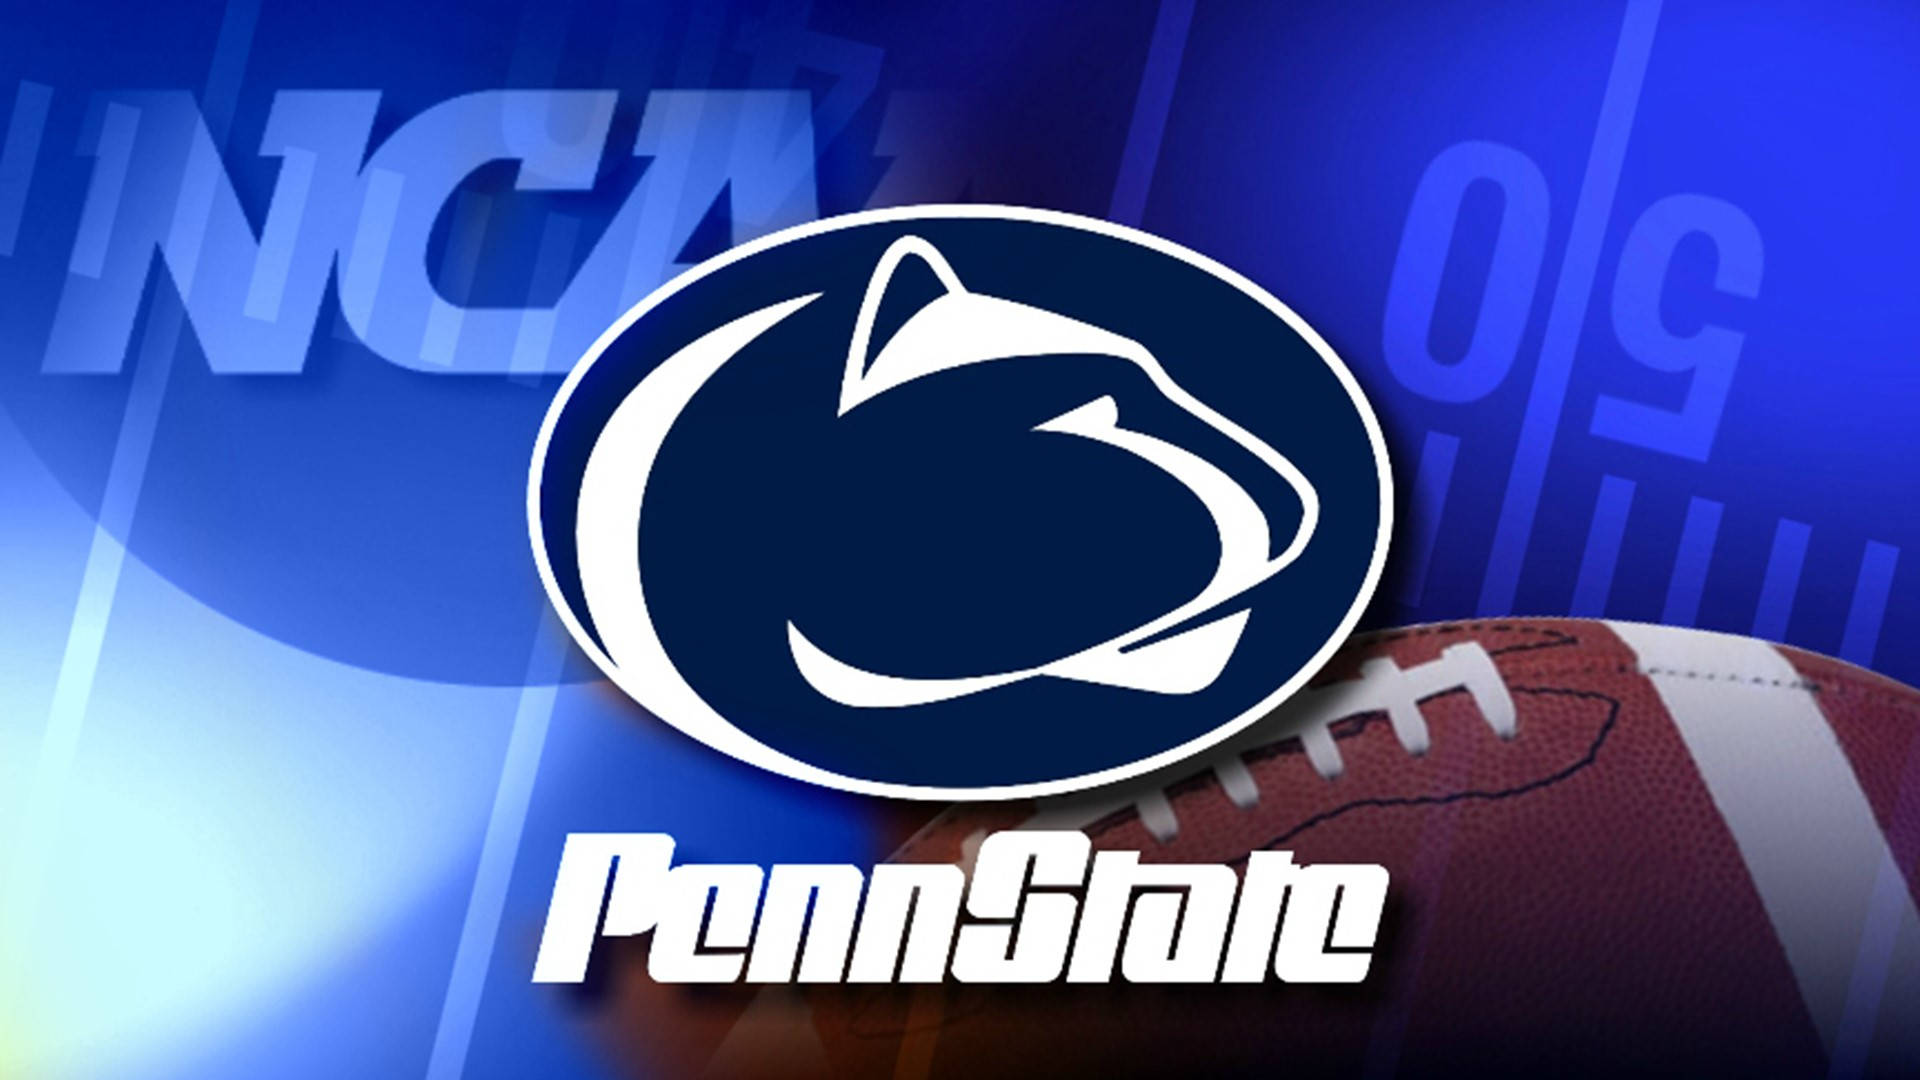 Download Penn State Football Logo Wallpaper